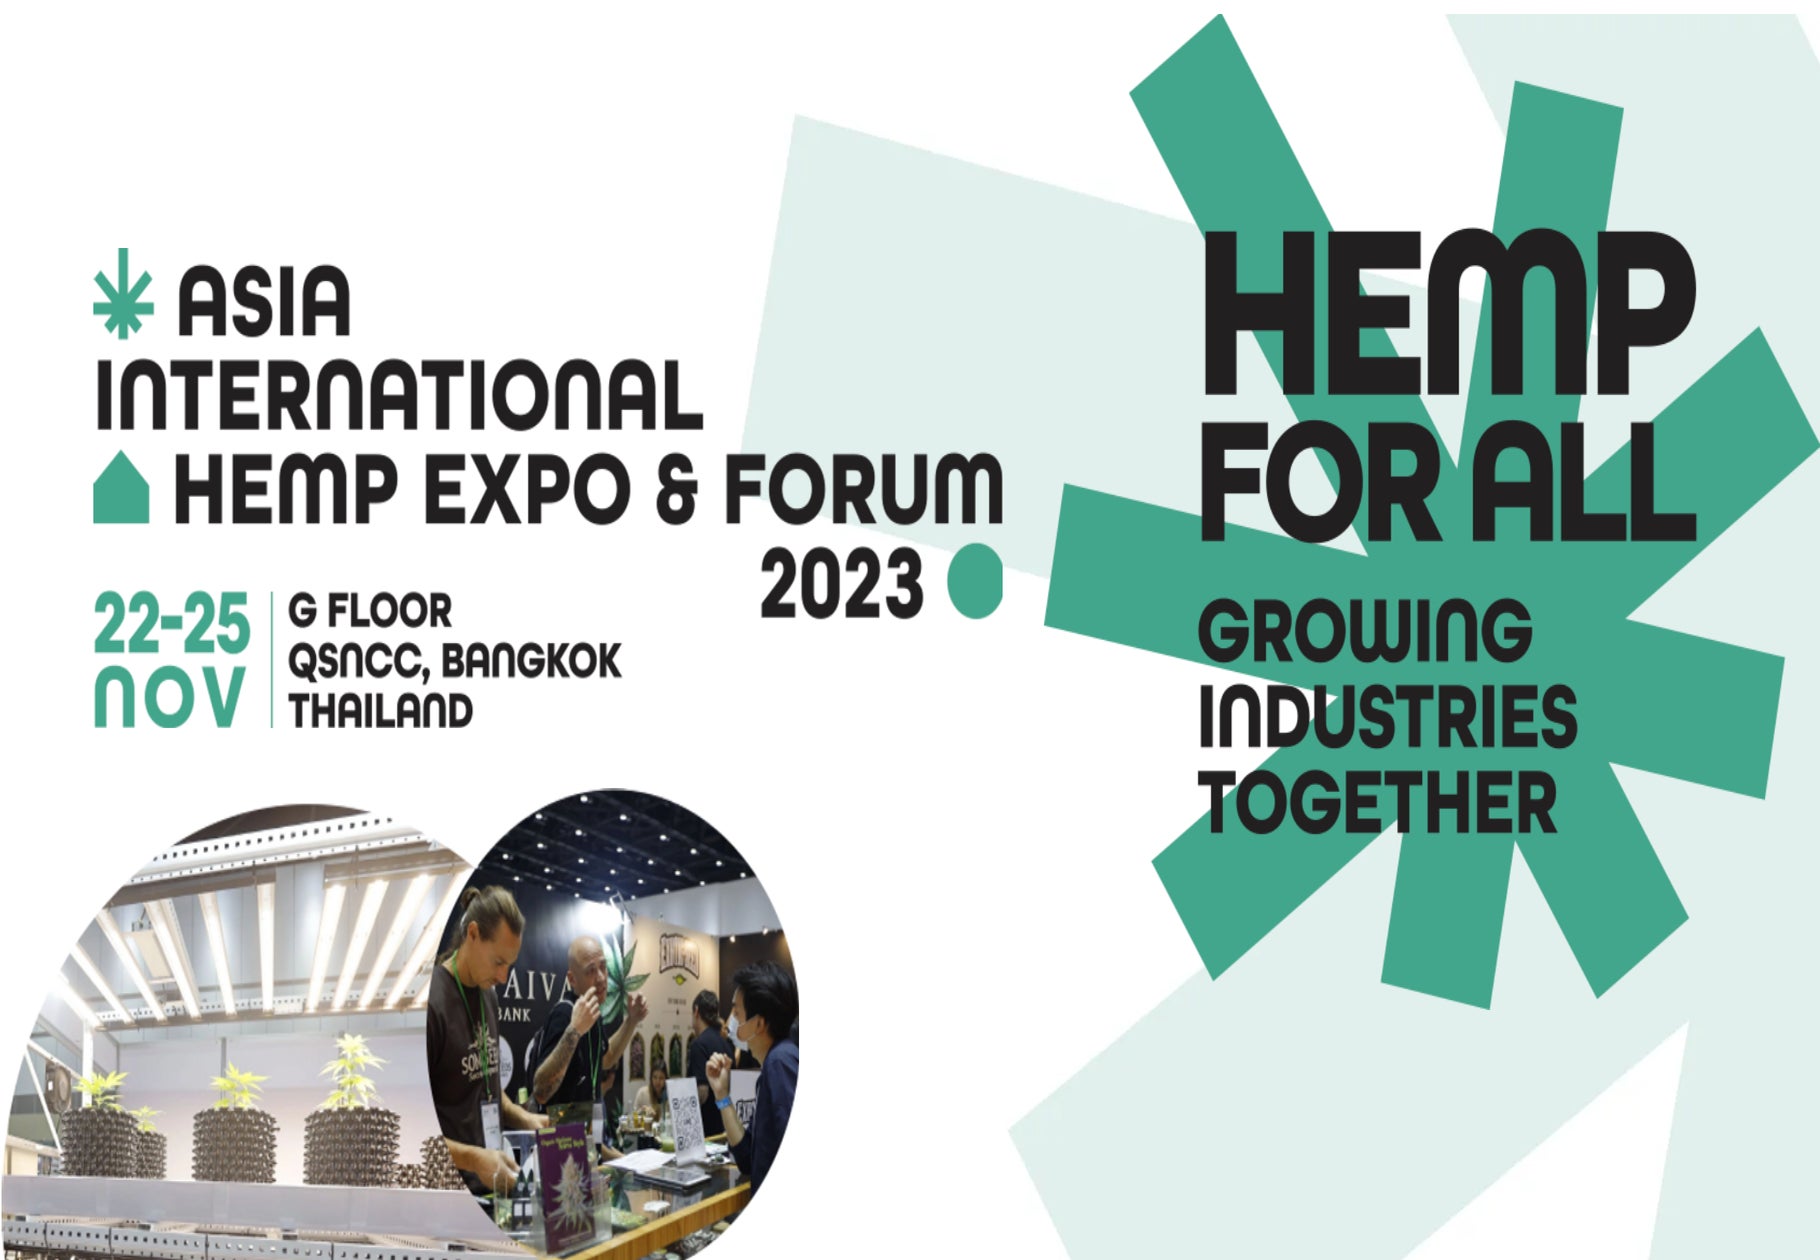 Asia International Hemp Expo & Forum